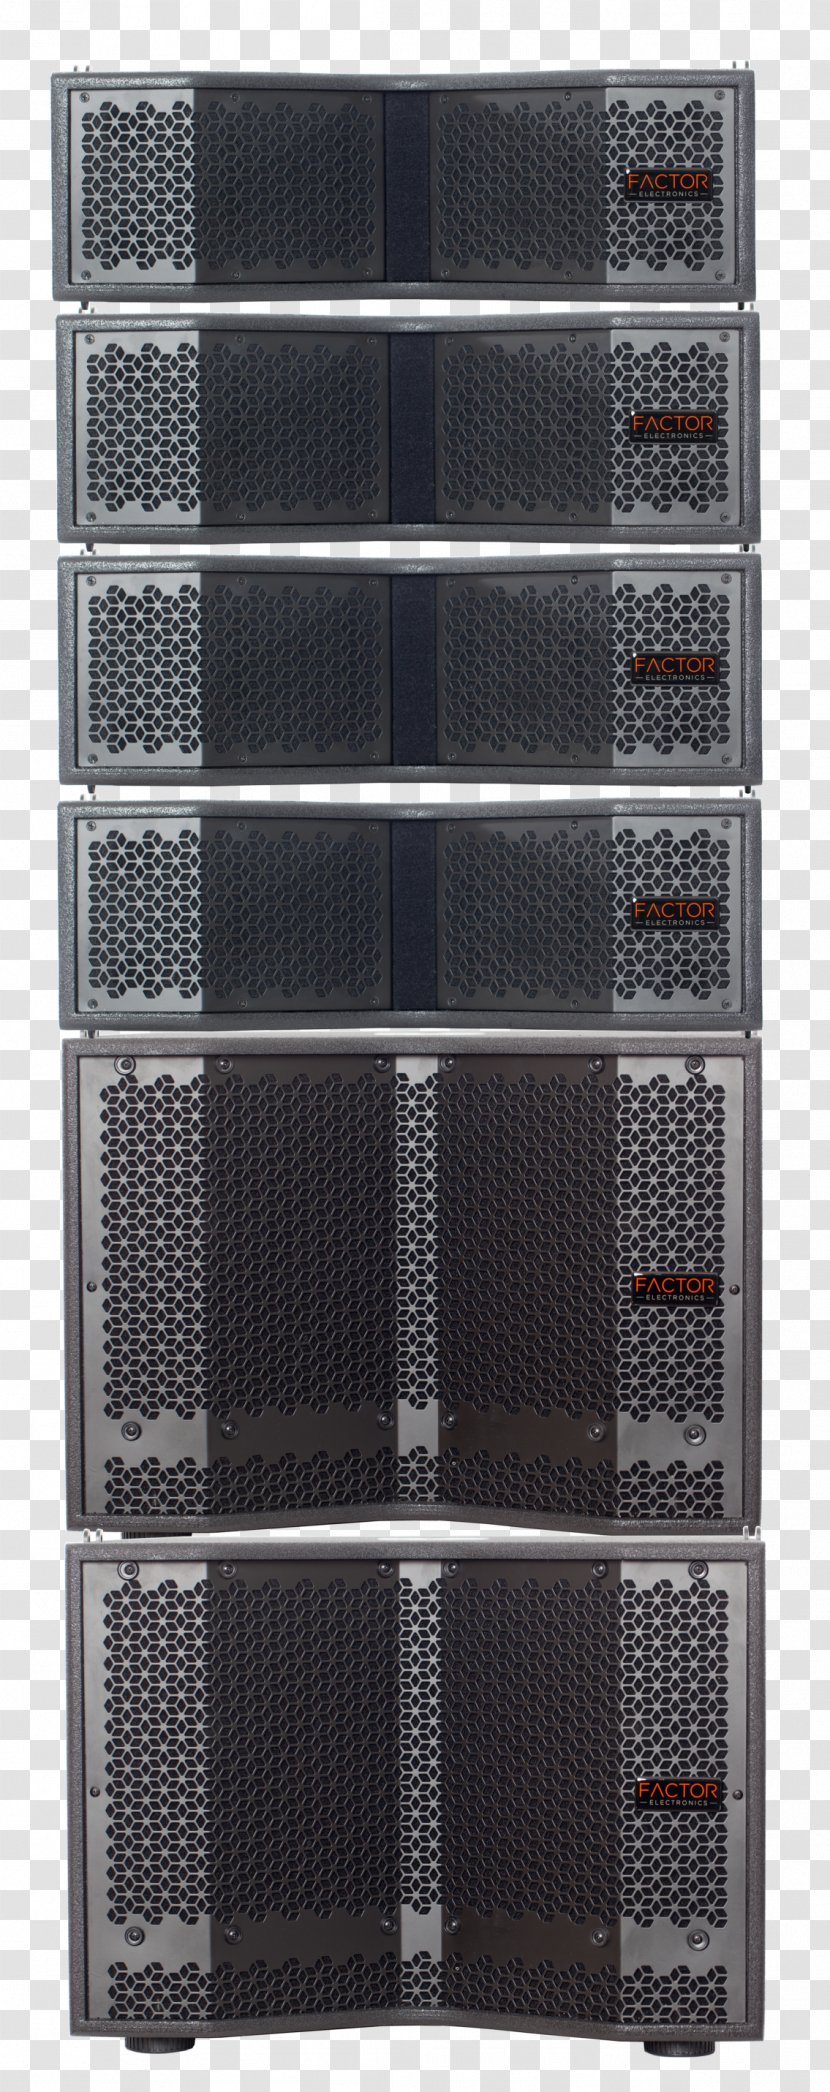 Computer Cases & Housings Disk Array Servers Cluster Transparent PNG